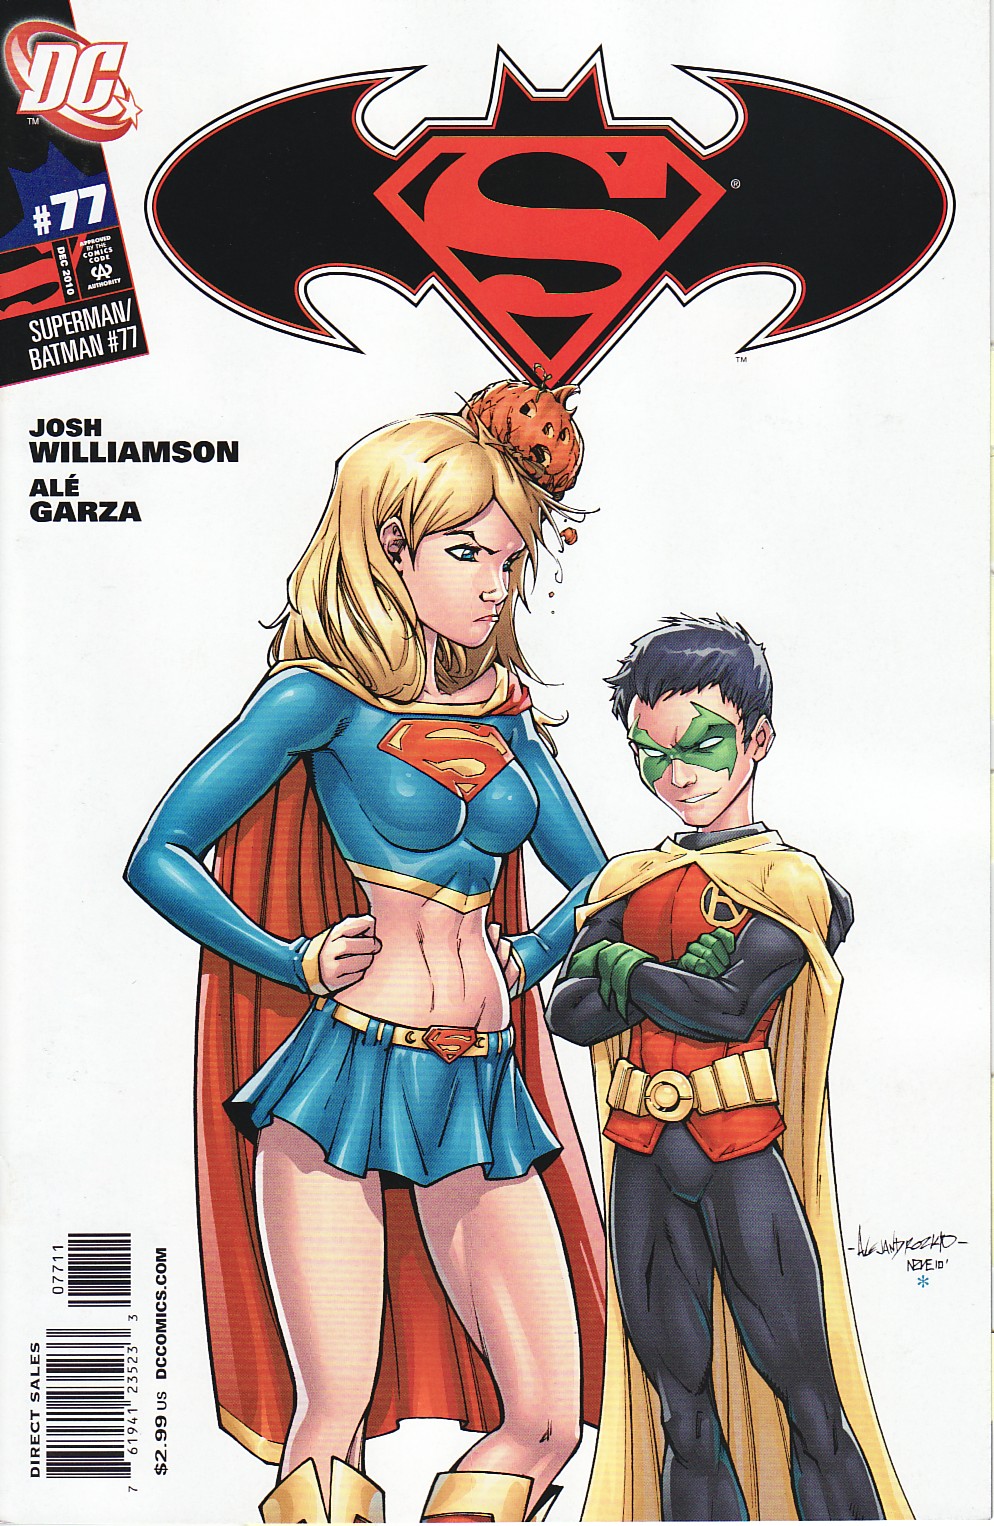 Supergirl Comic Box Commentary: Review: SupermanBatman #77